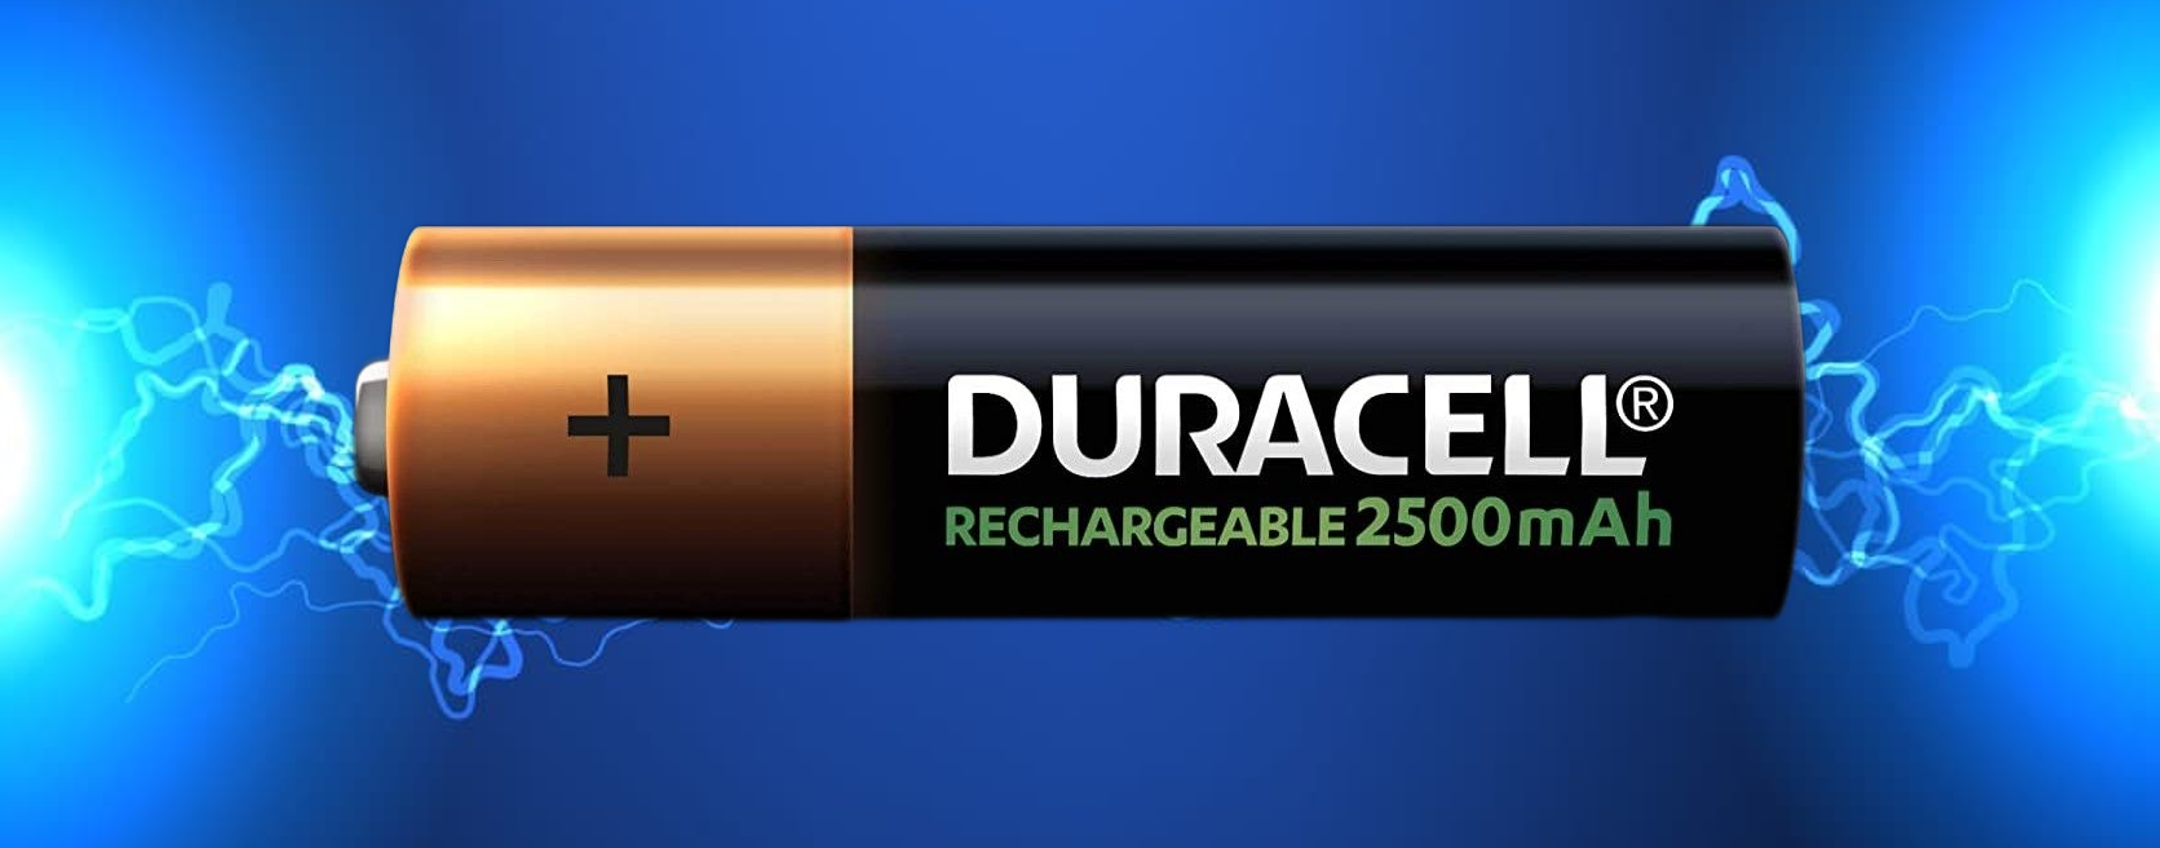 Migliori batterie ricaricabili